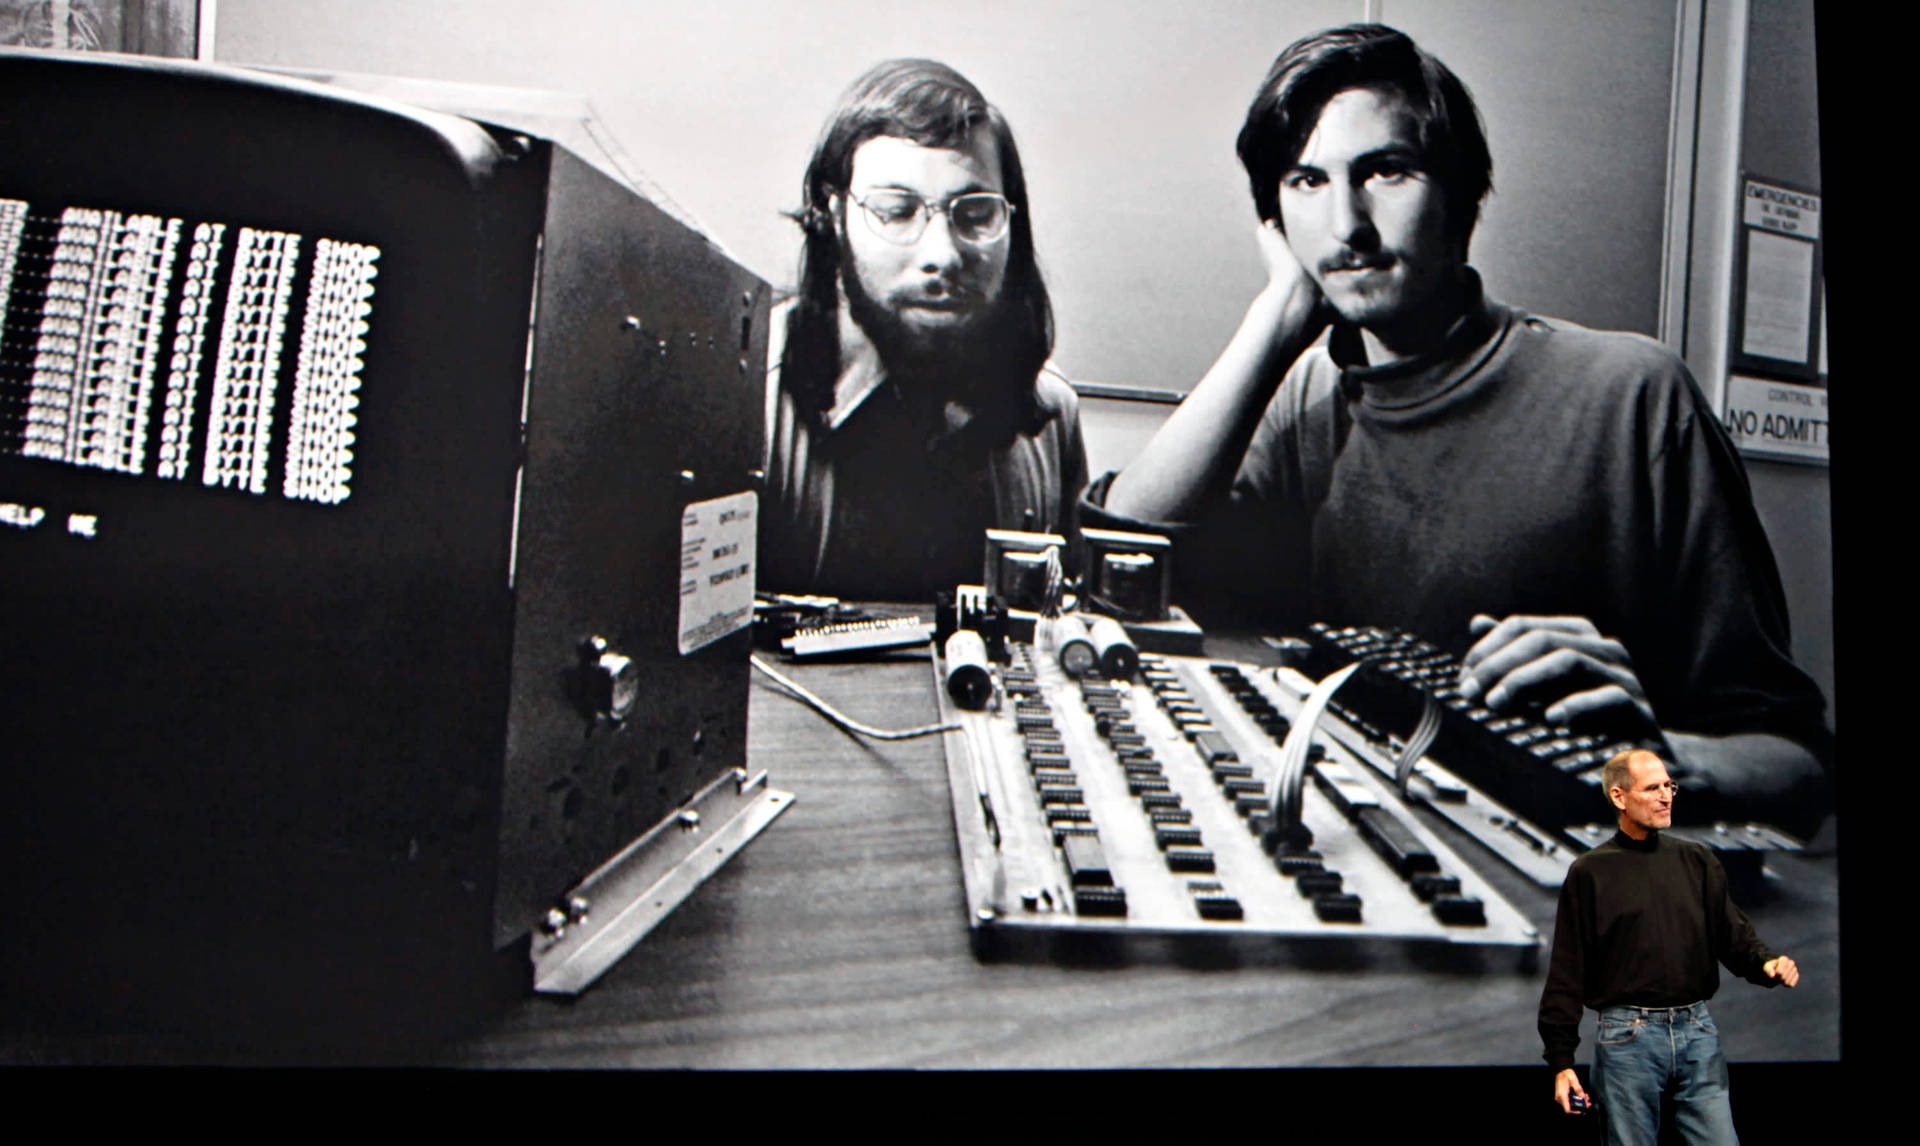 Who did it better: Steve Jobs or Bill Gates?